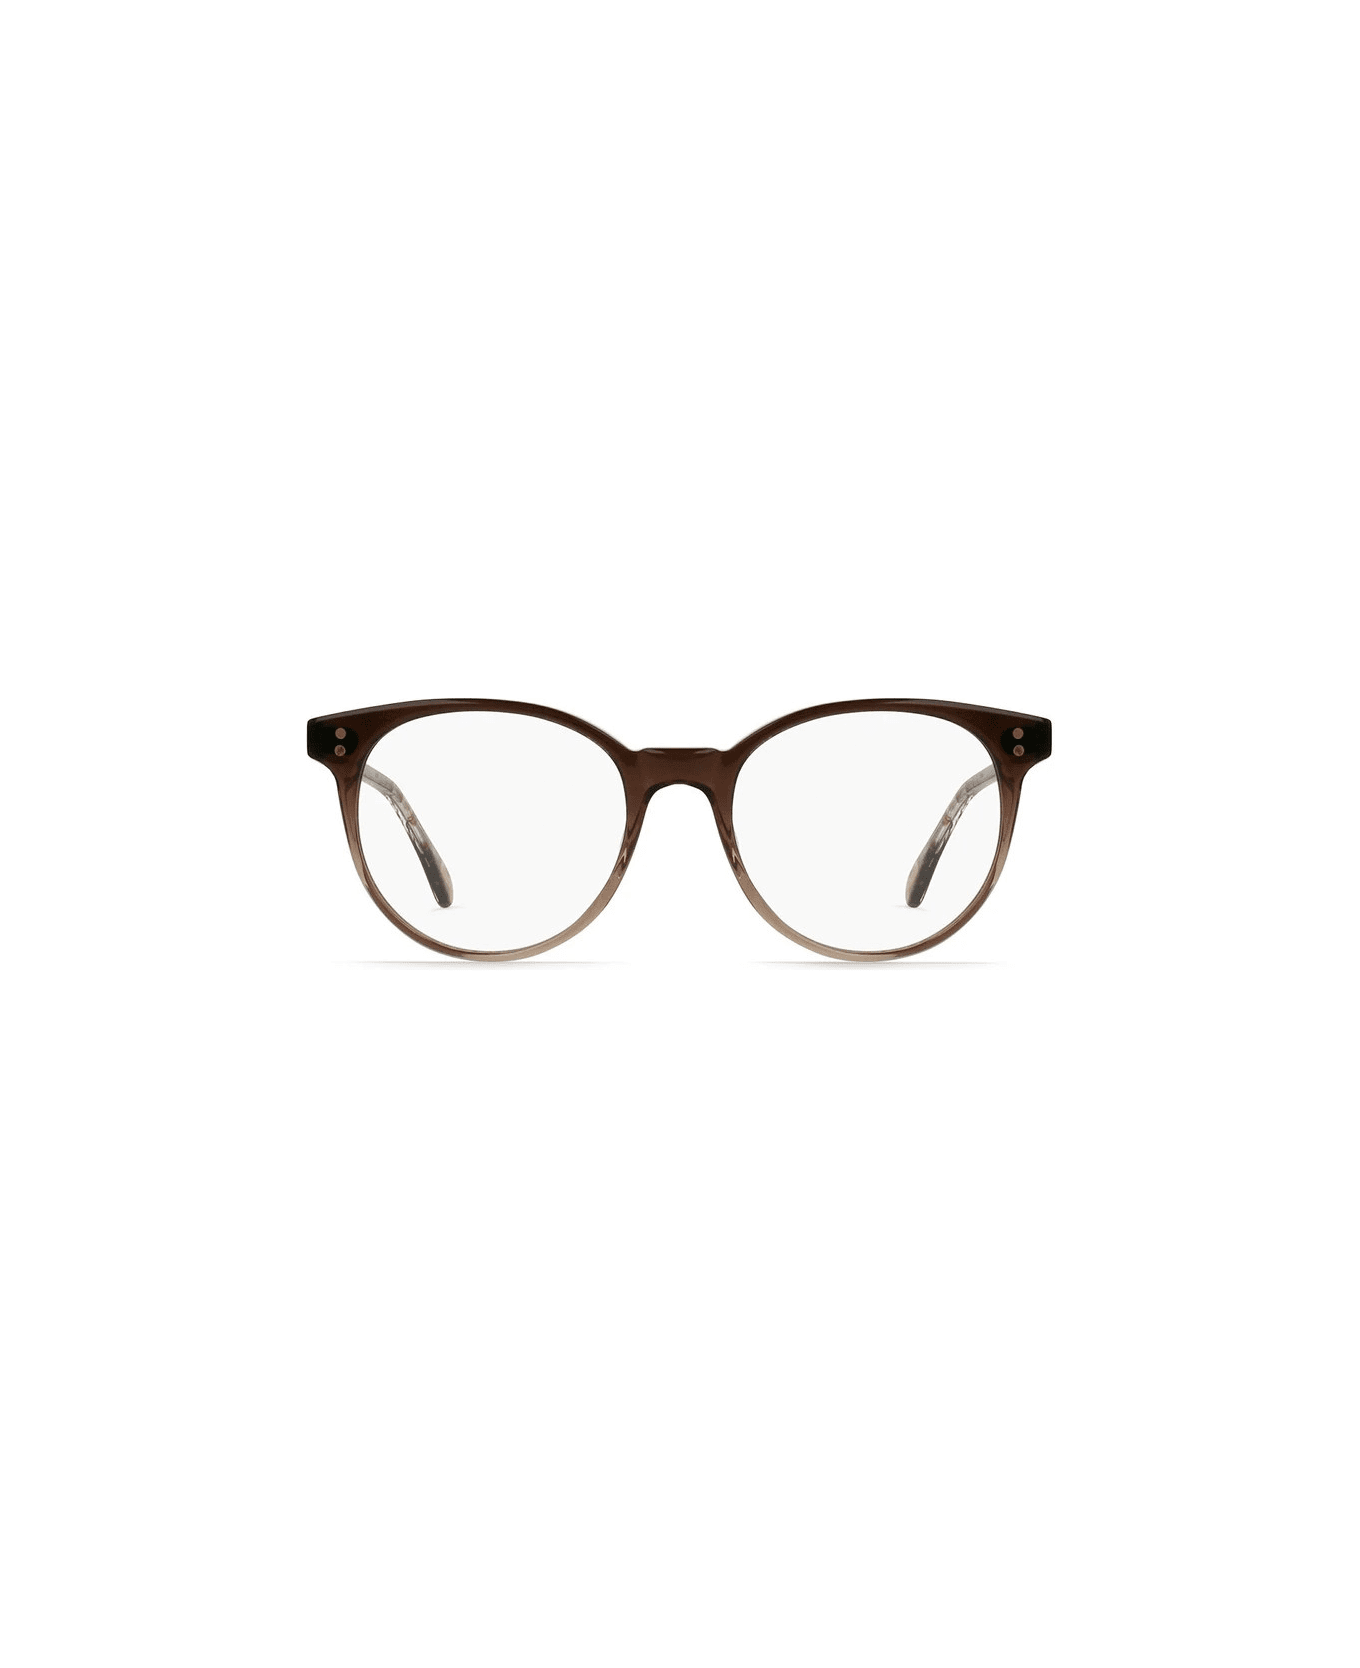 Raen Marin E173 Glasses - Marrone アイウェア